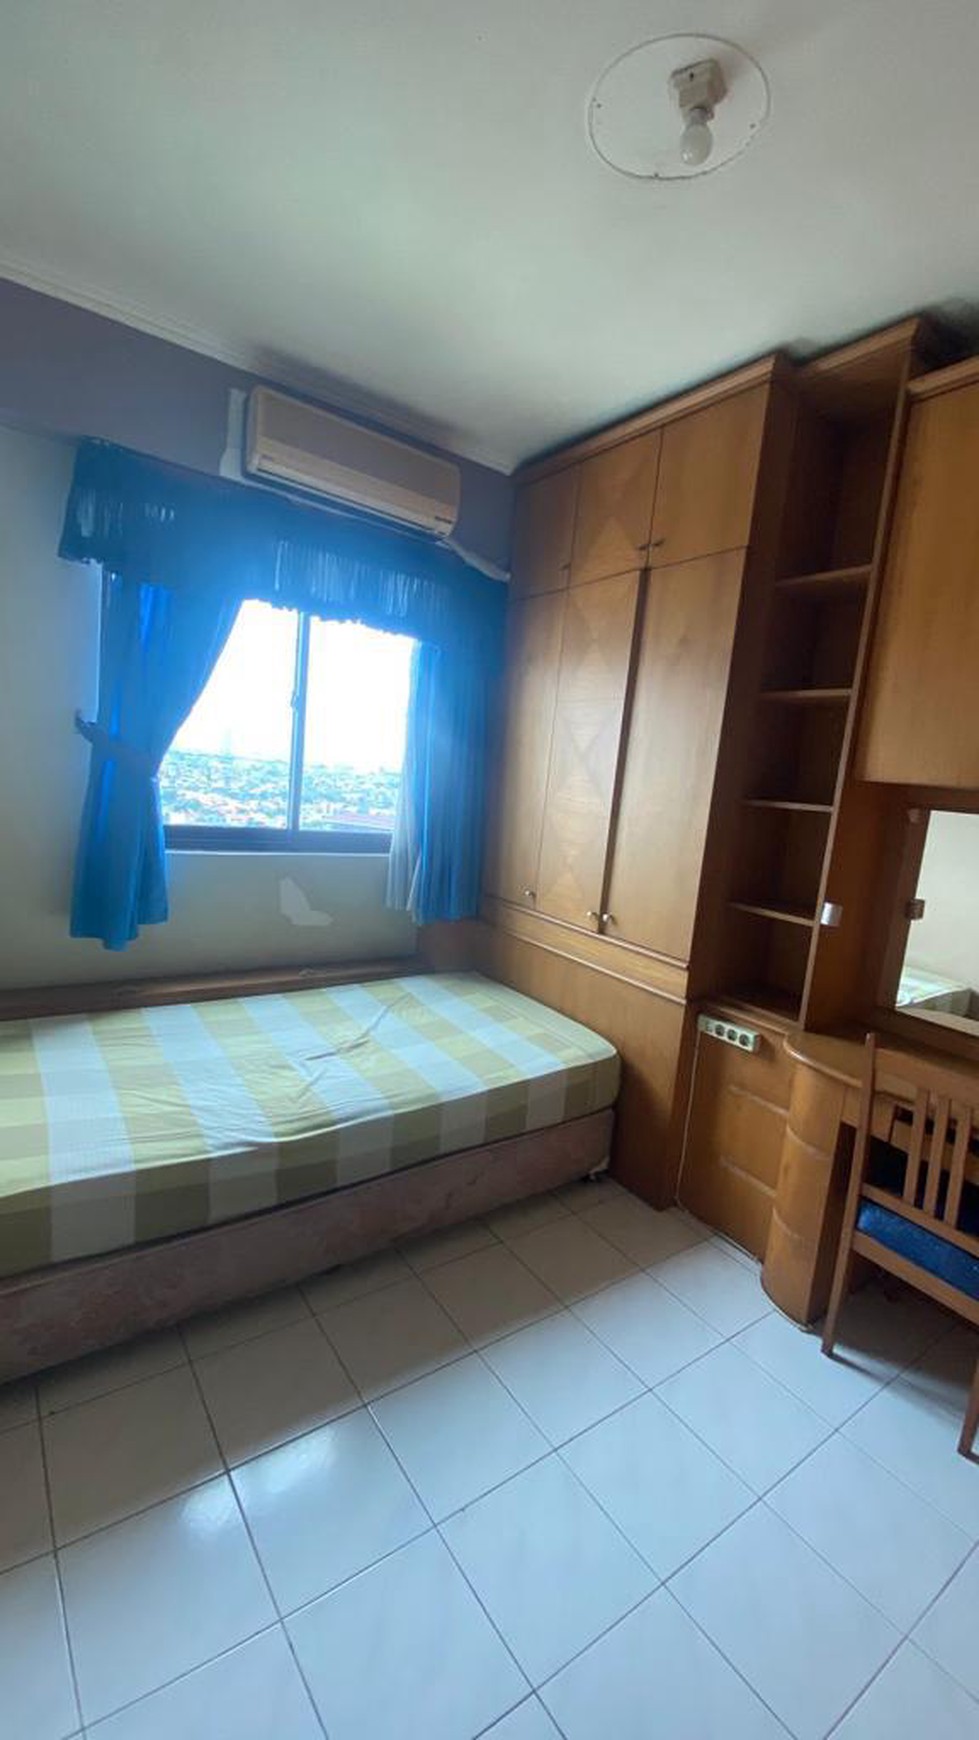 Dijual Apt Cempaka Mas Jakarta Pusat Luas 74 m2 tipe 2+1 kamar tidur semi furnish bisa KPA